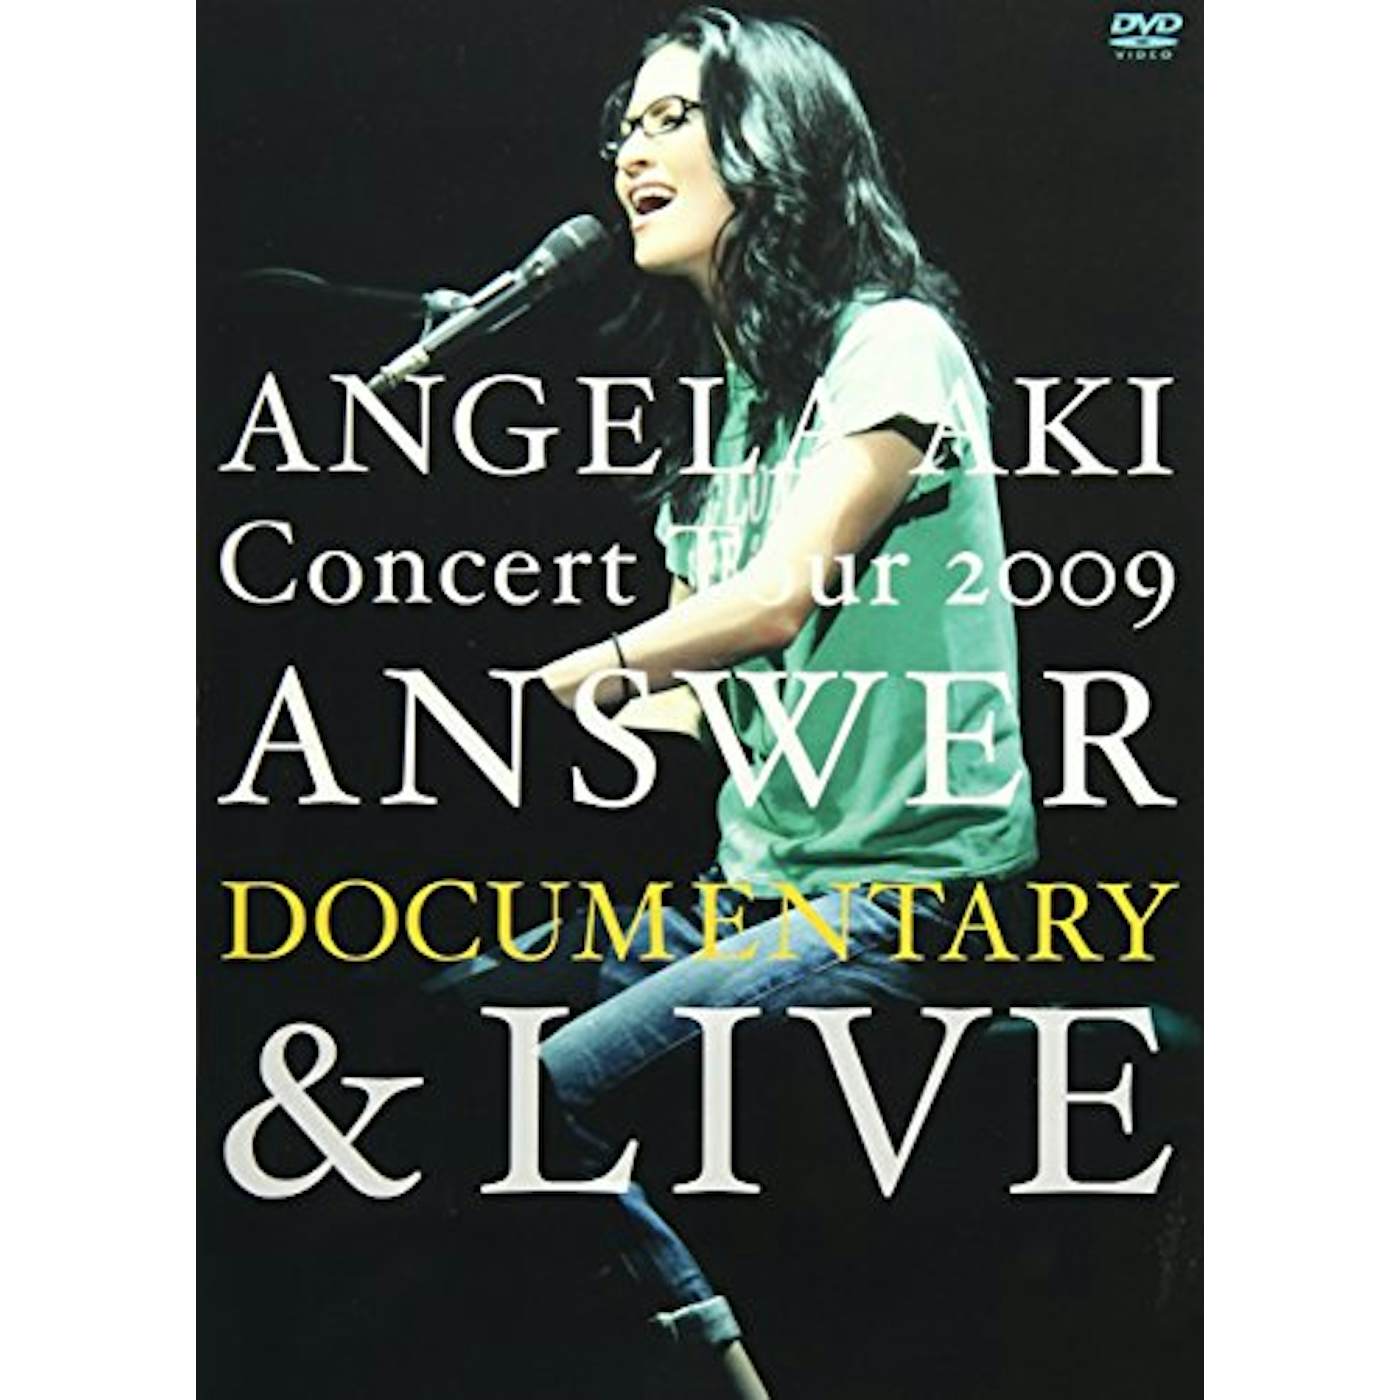 Angela Aki CONCERT TOUR 2009: ANSWER (DOCUMENTARY & LIVE) DVD